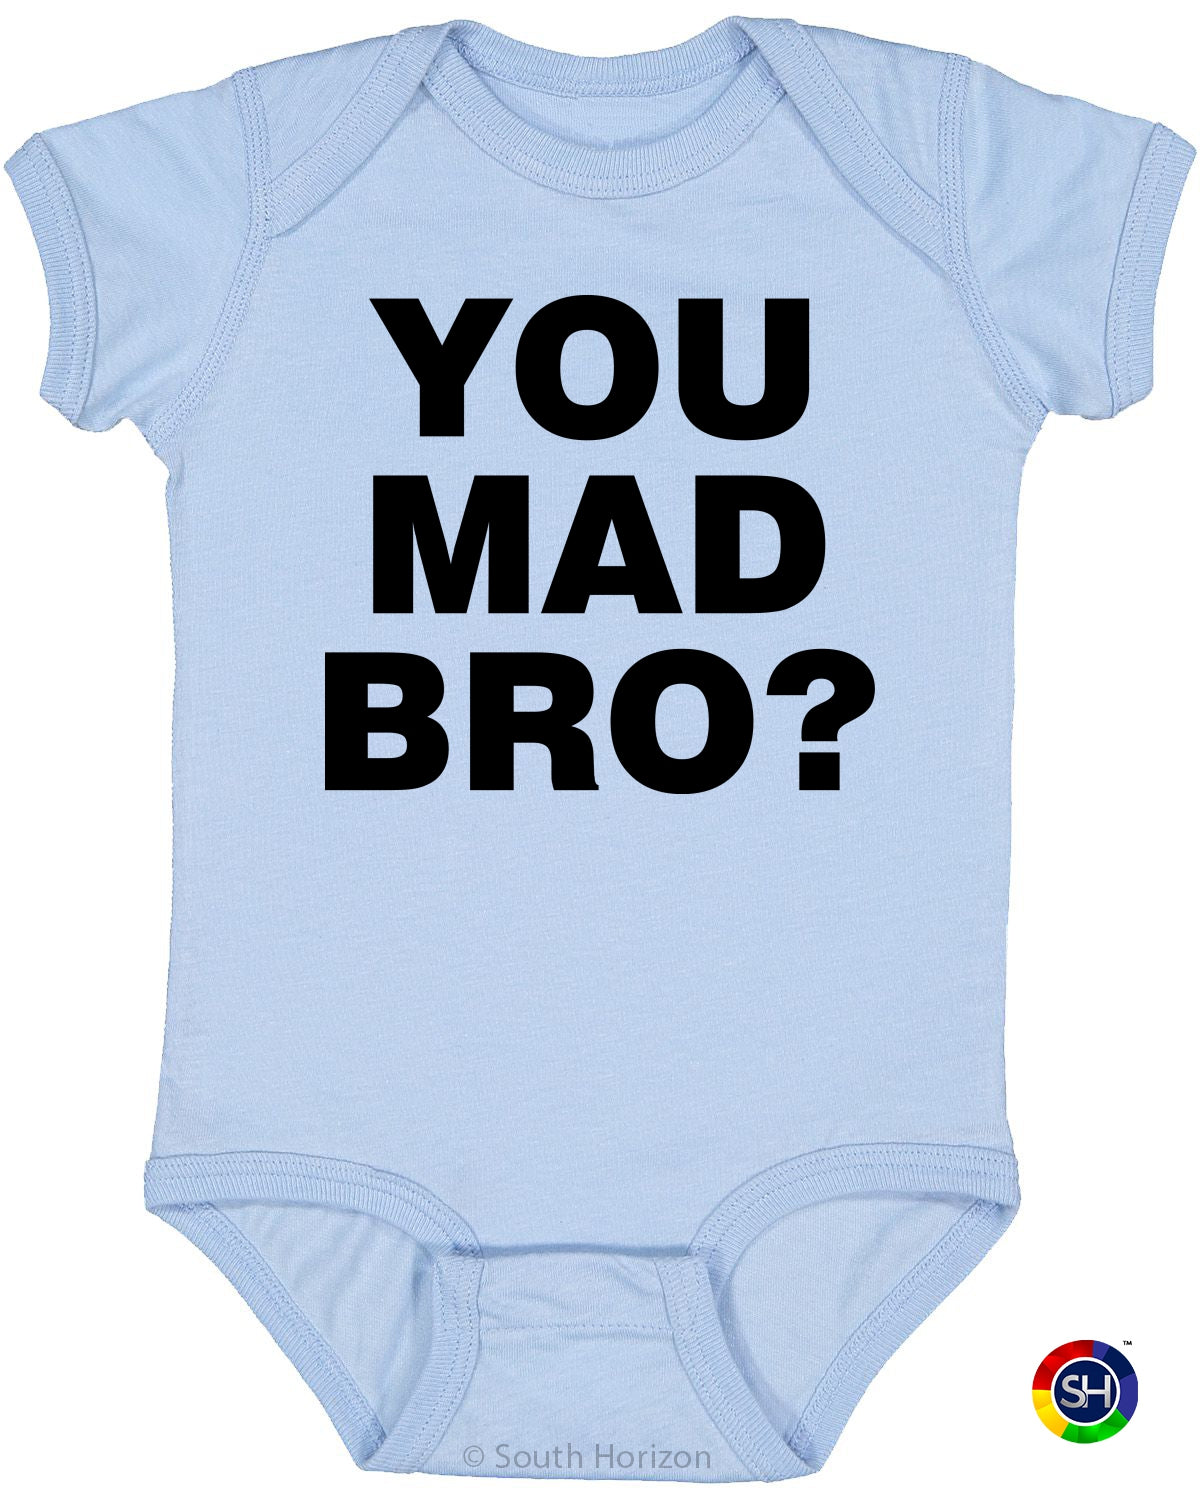 YOU MAD BRO? on Infant BodySuit (#826-10)